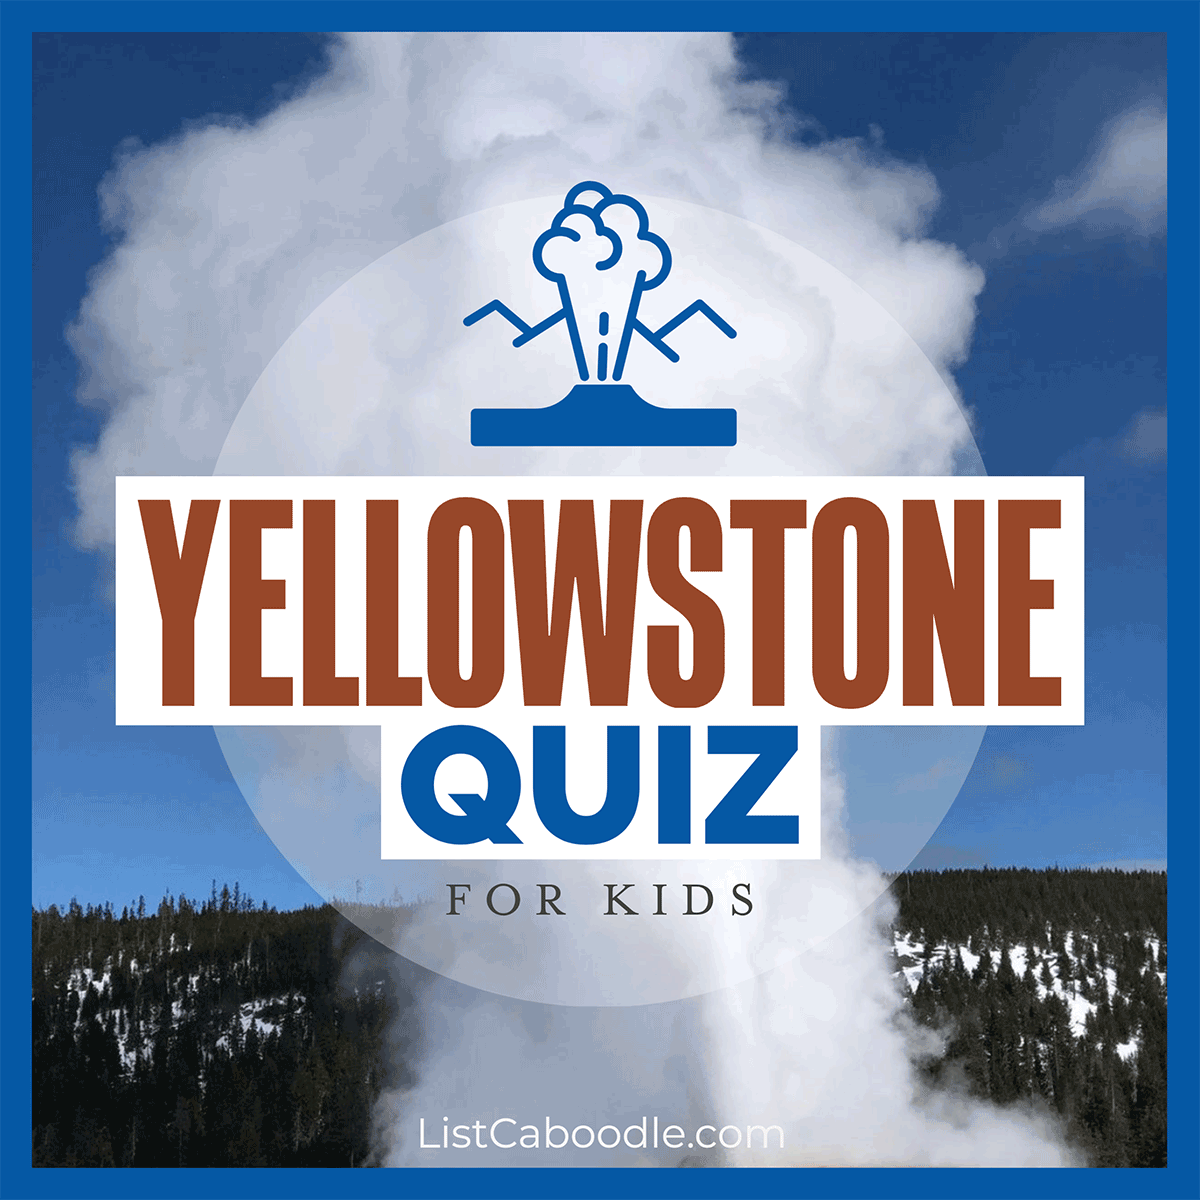 Yellowstone Quiz for kids